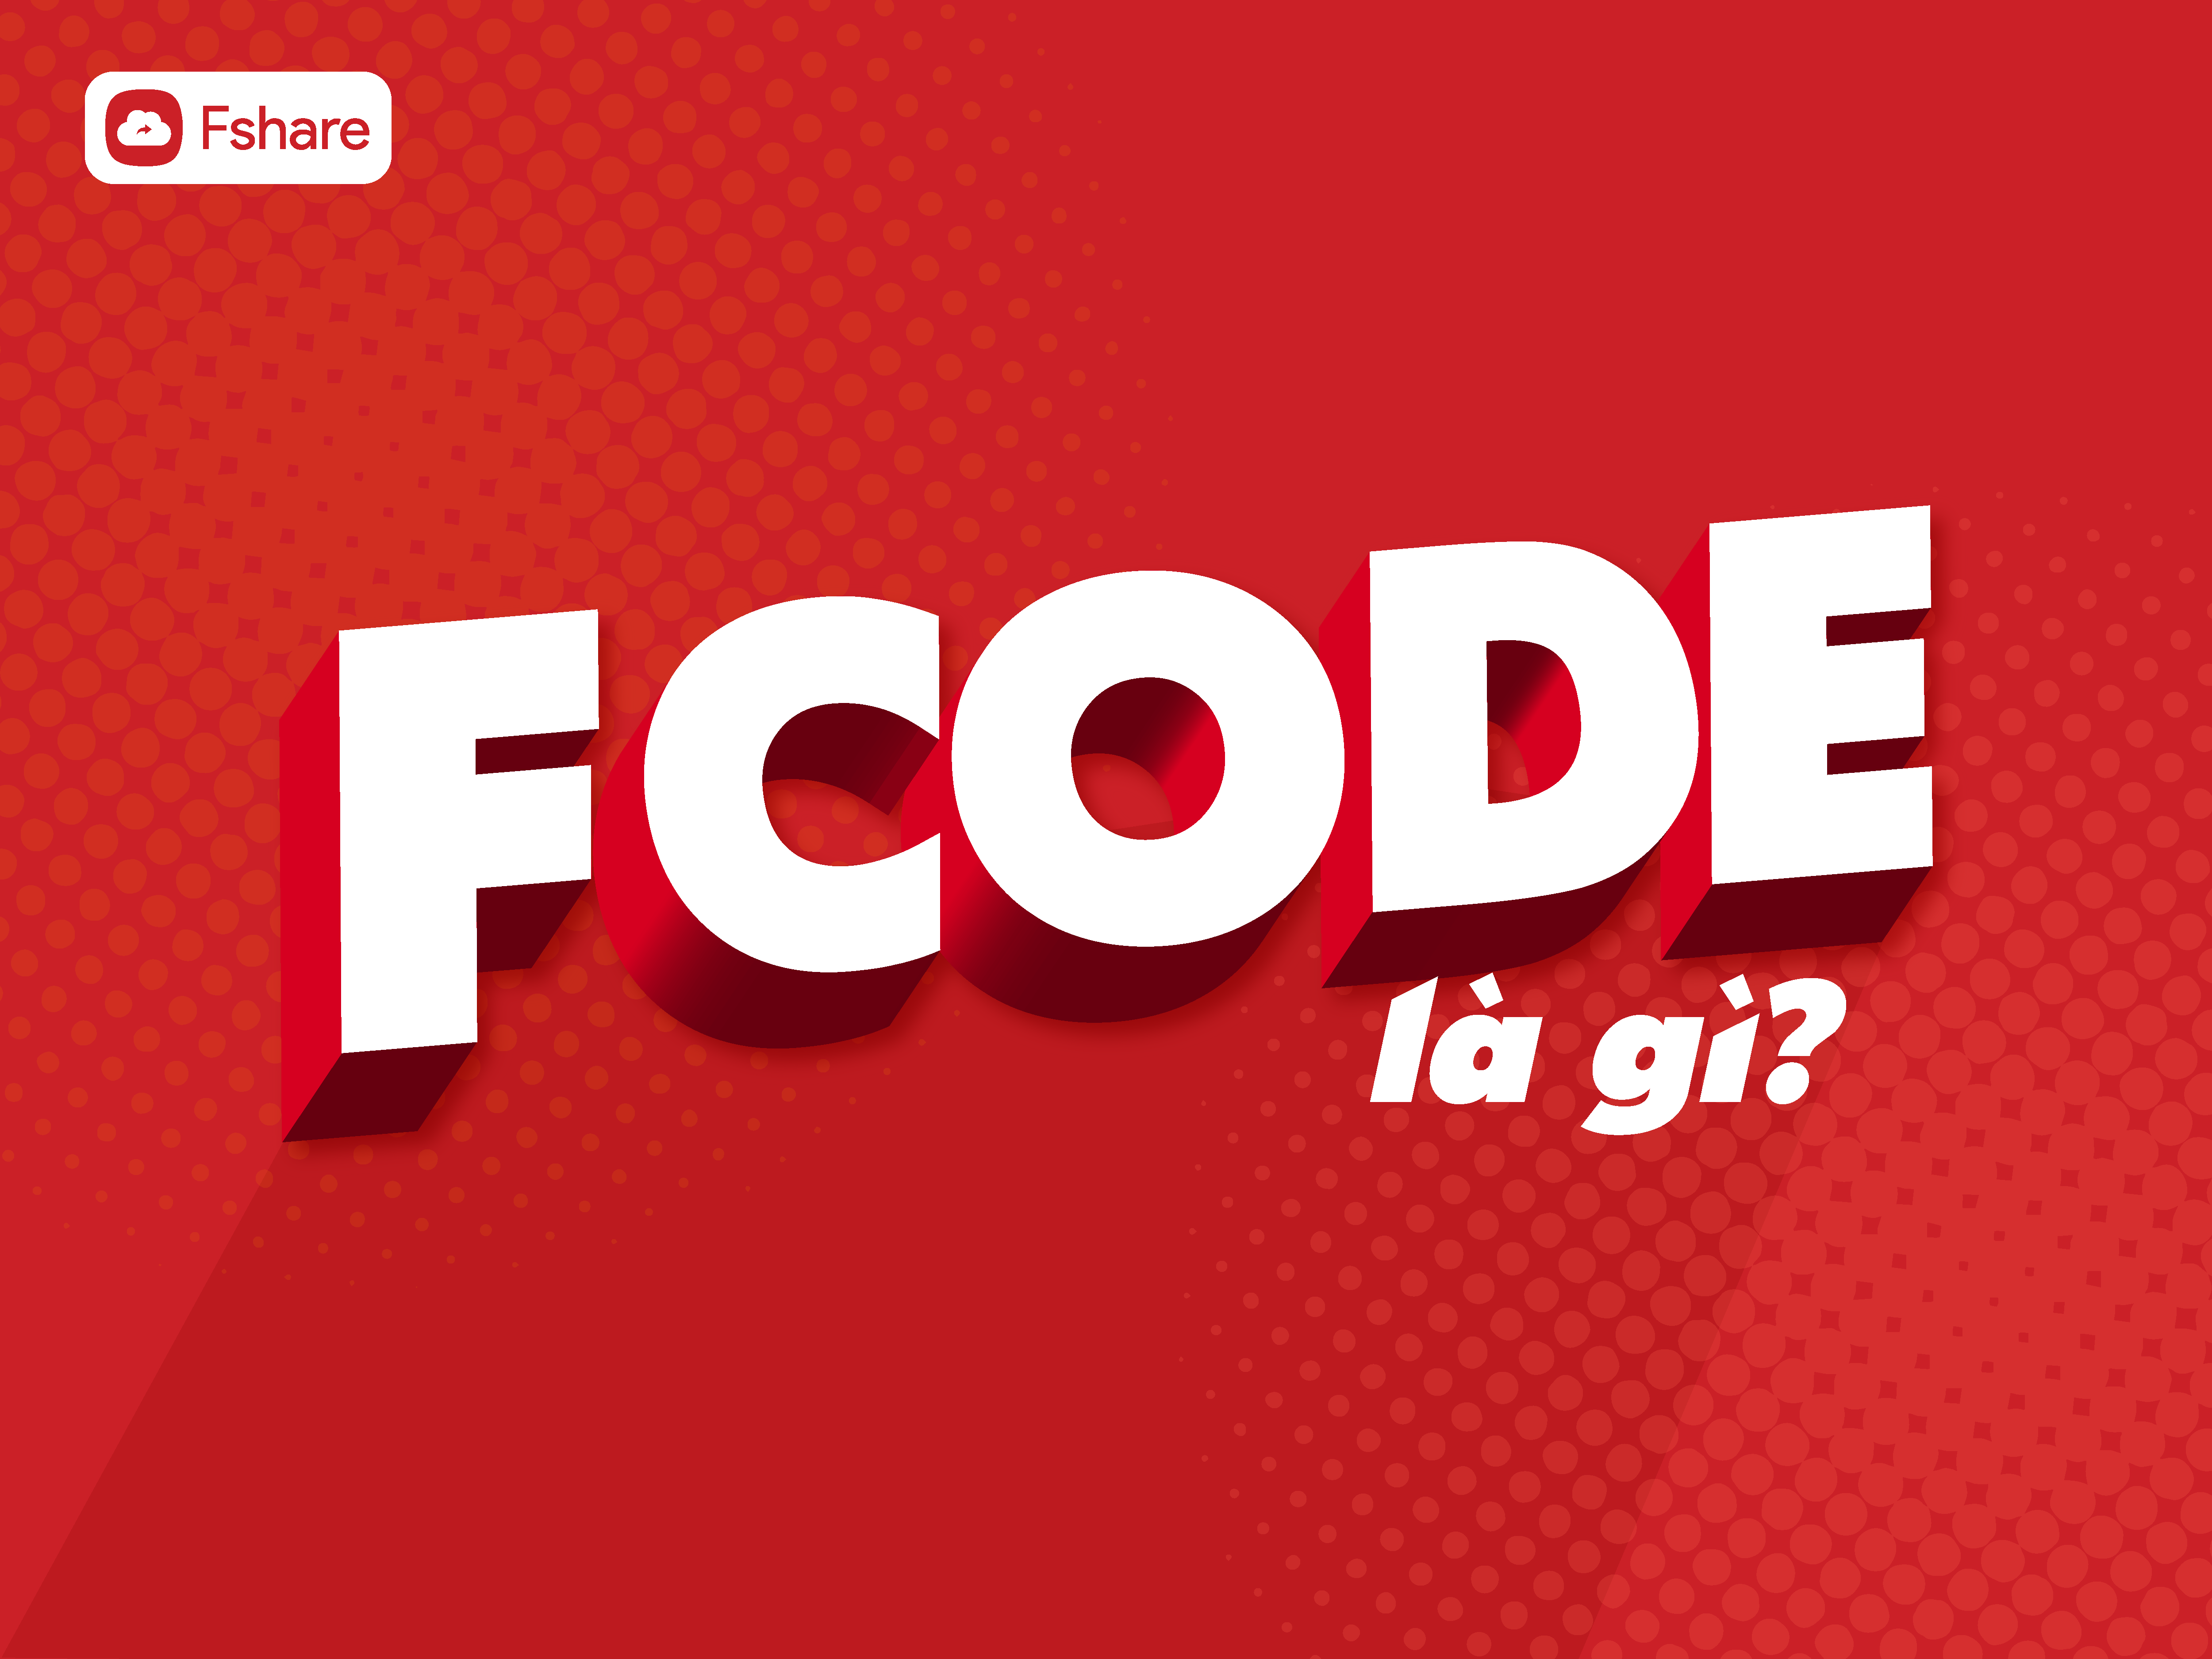 Fcode